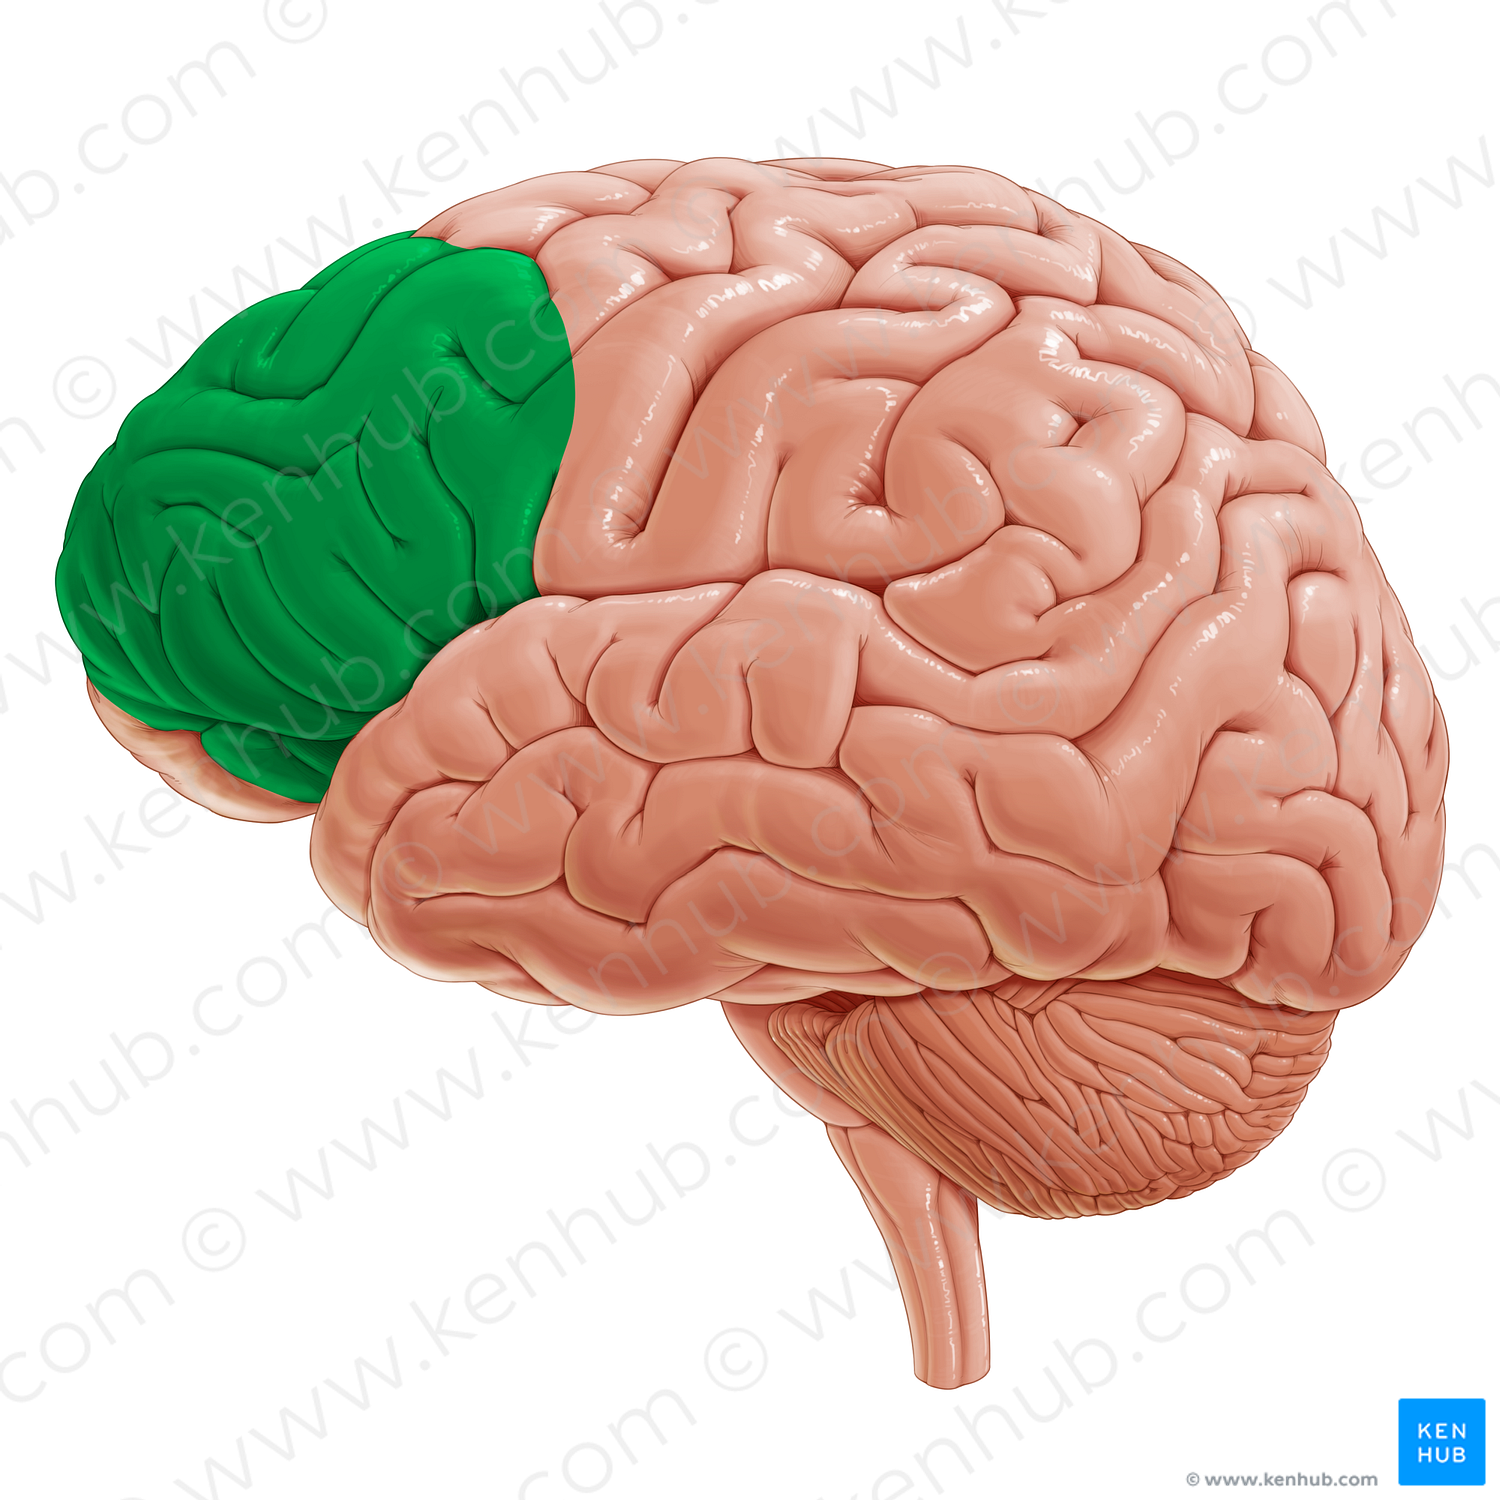 Lateral region of prefrontal cortex (#20332)